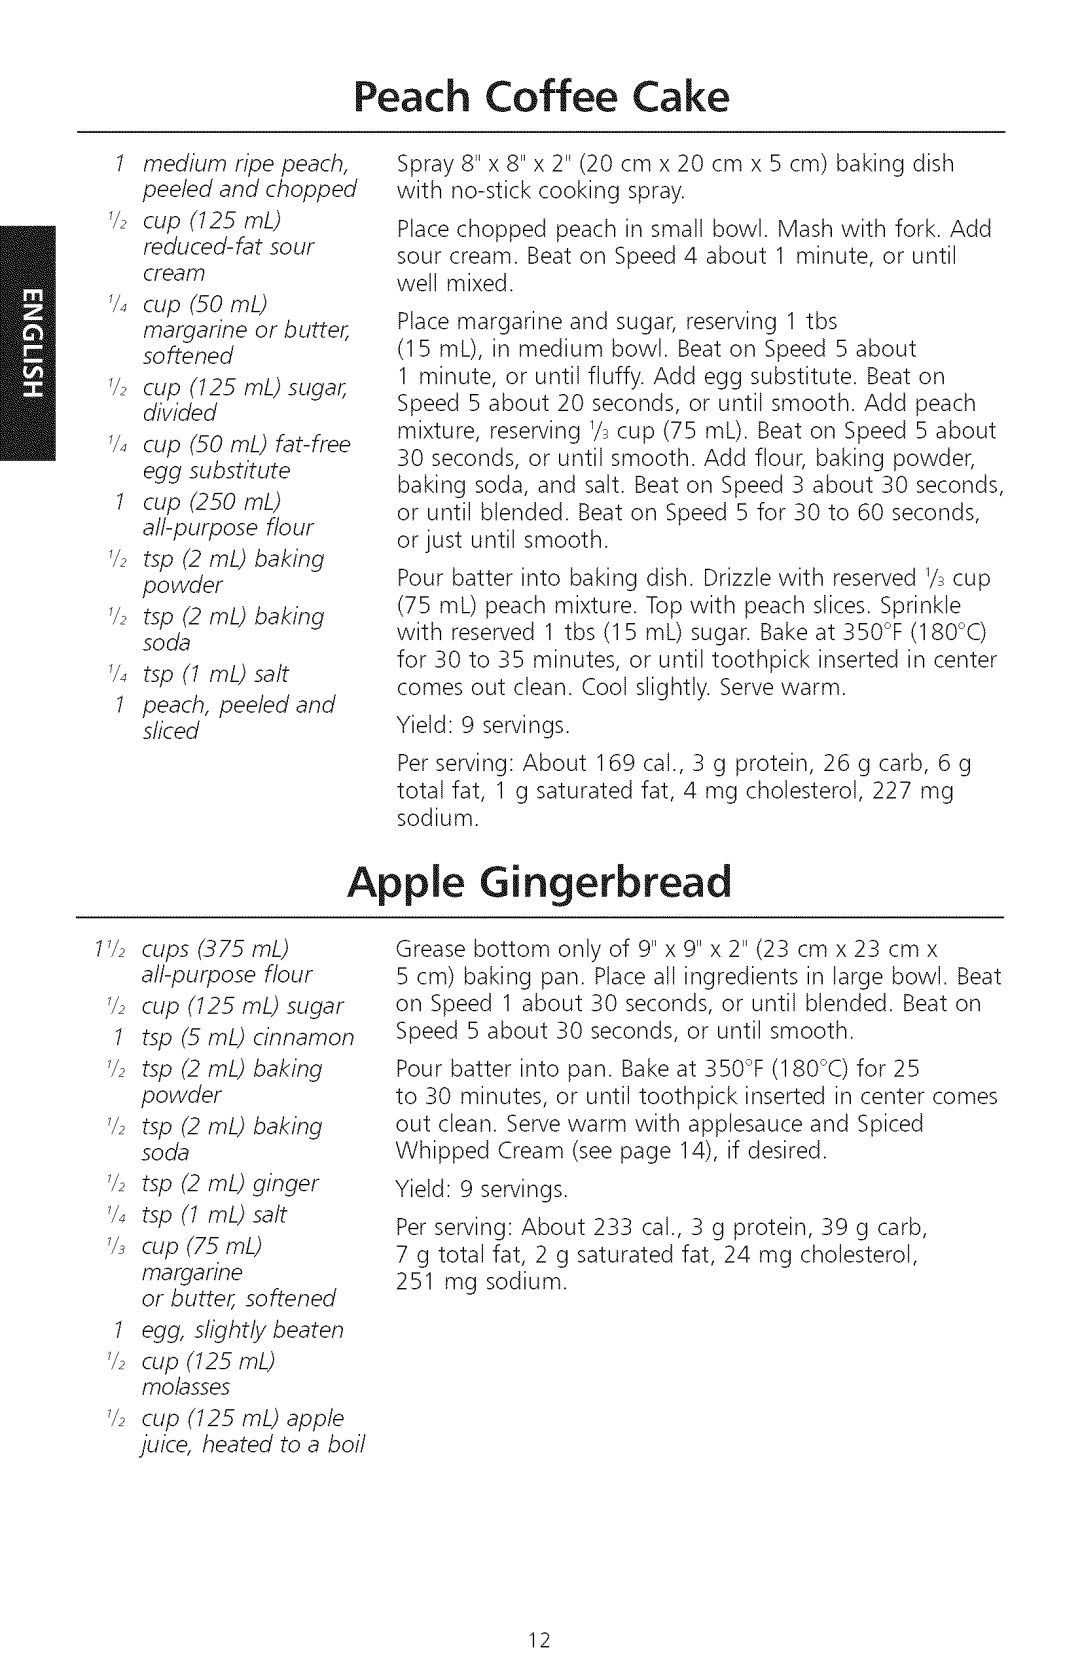 KitchenAid KHM920, KHM720 manual Apple Gingerbread, Peach Coffee Cake 